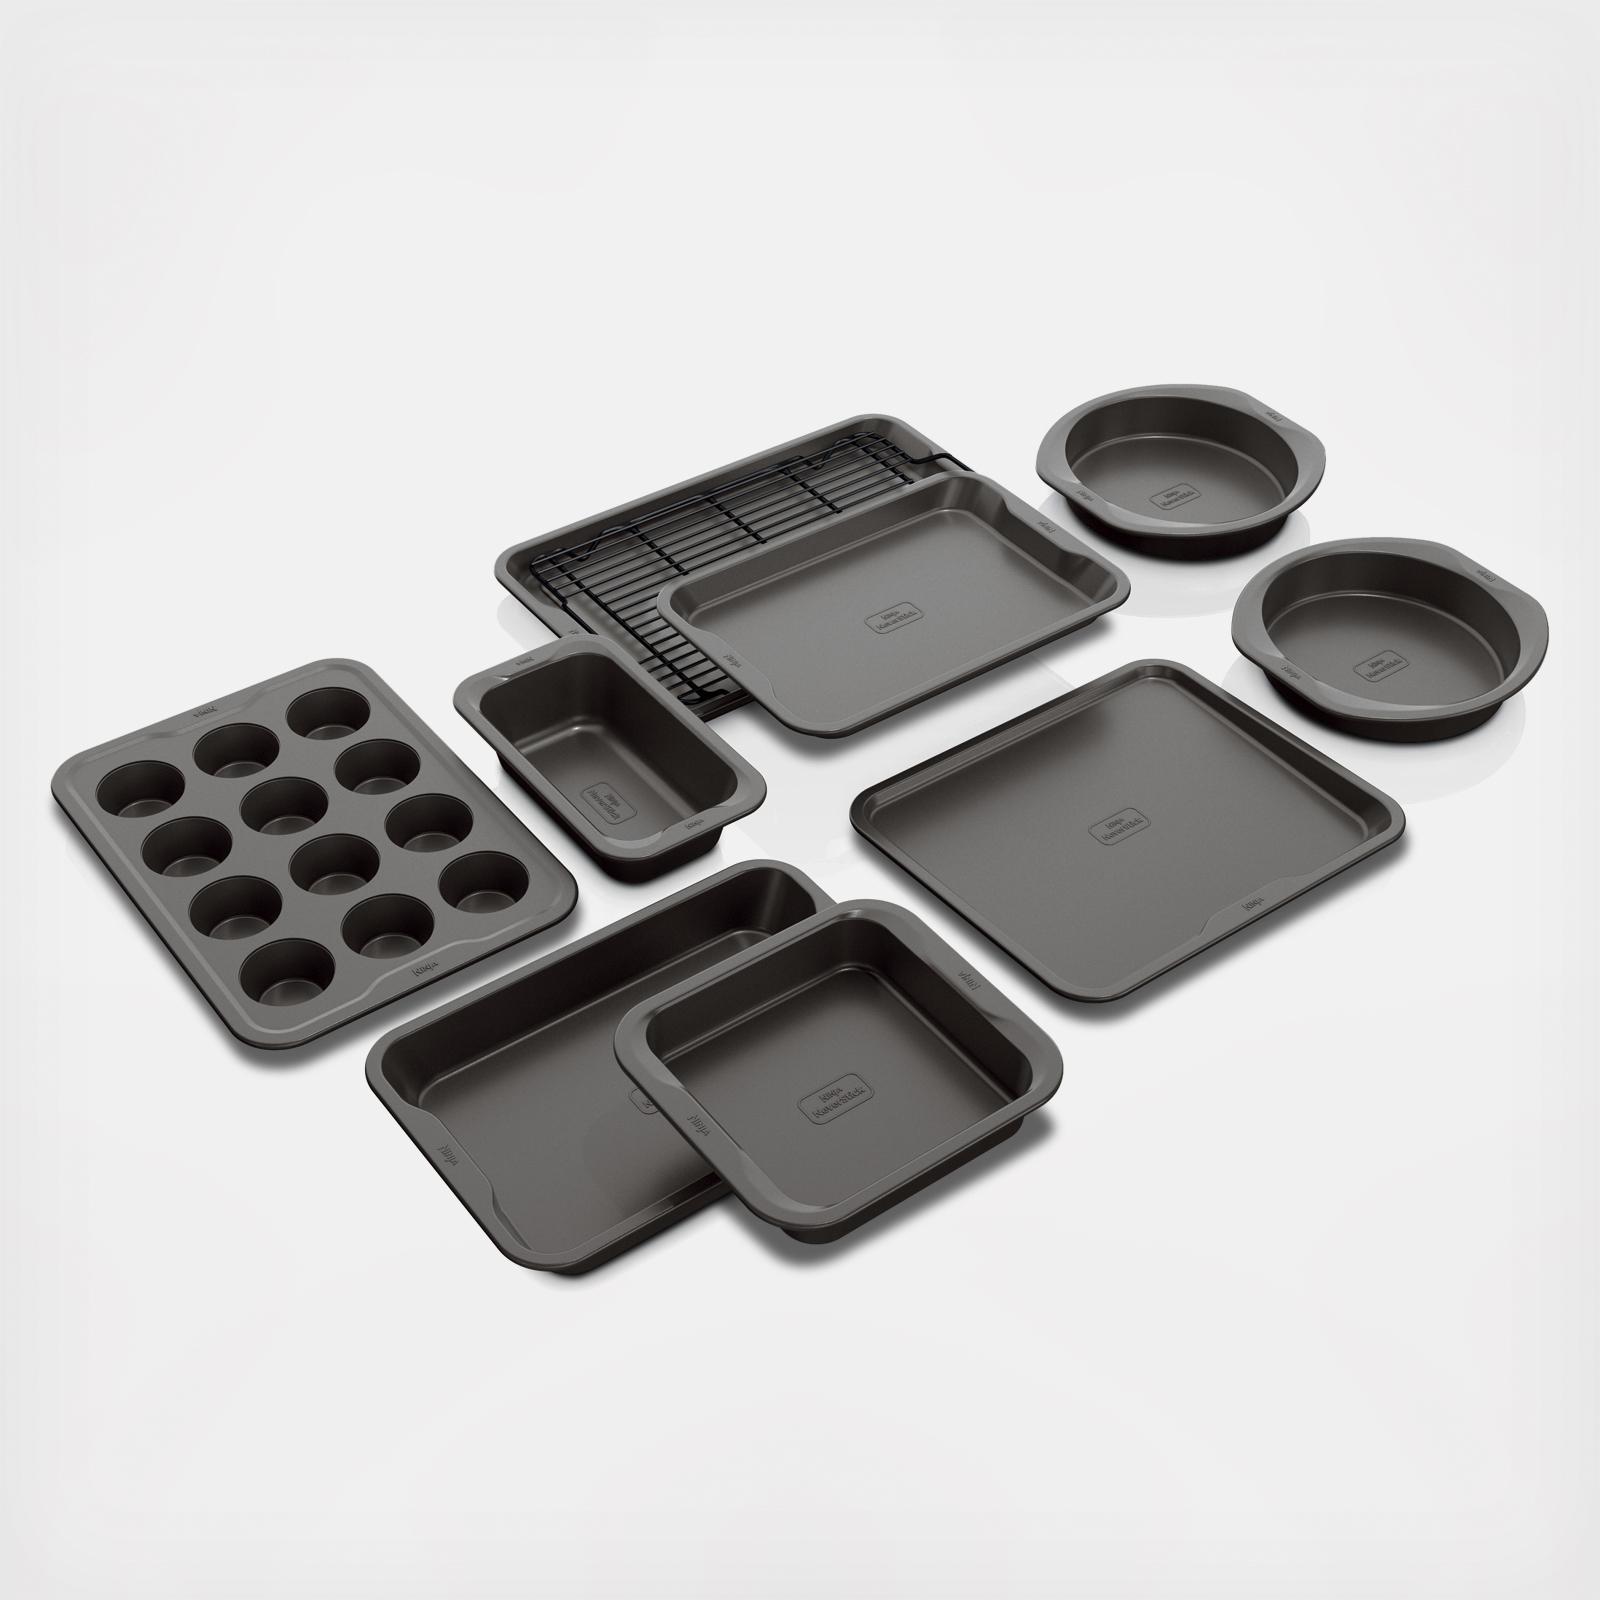 Euro Pro Ninja Foodi 10pc Cookware set